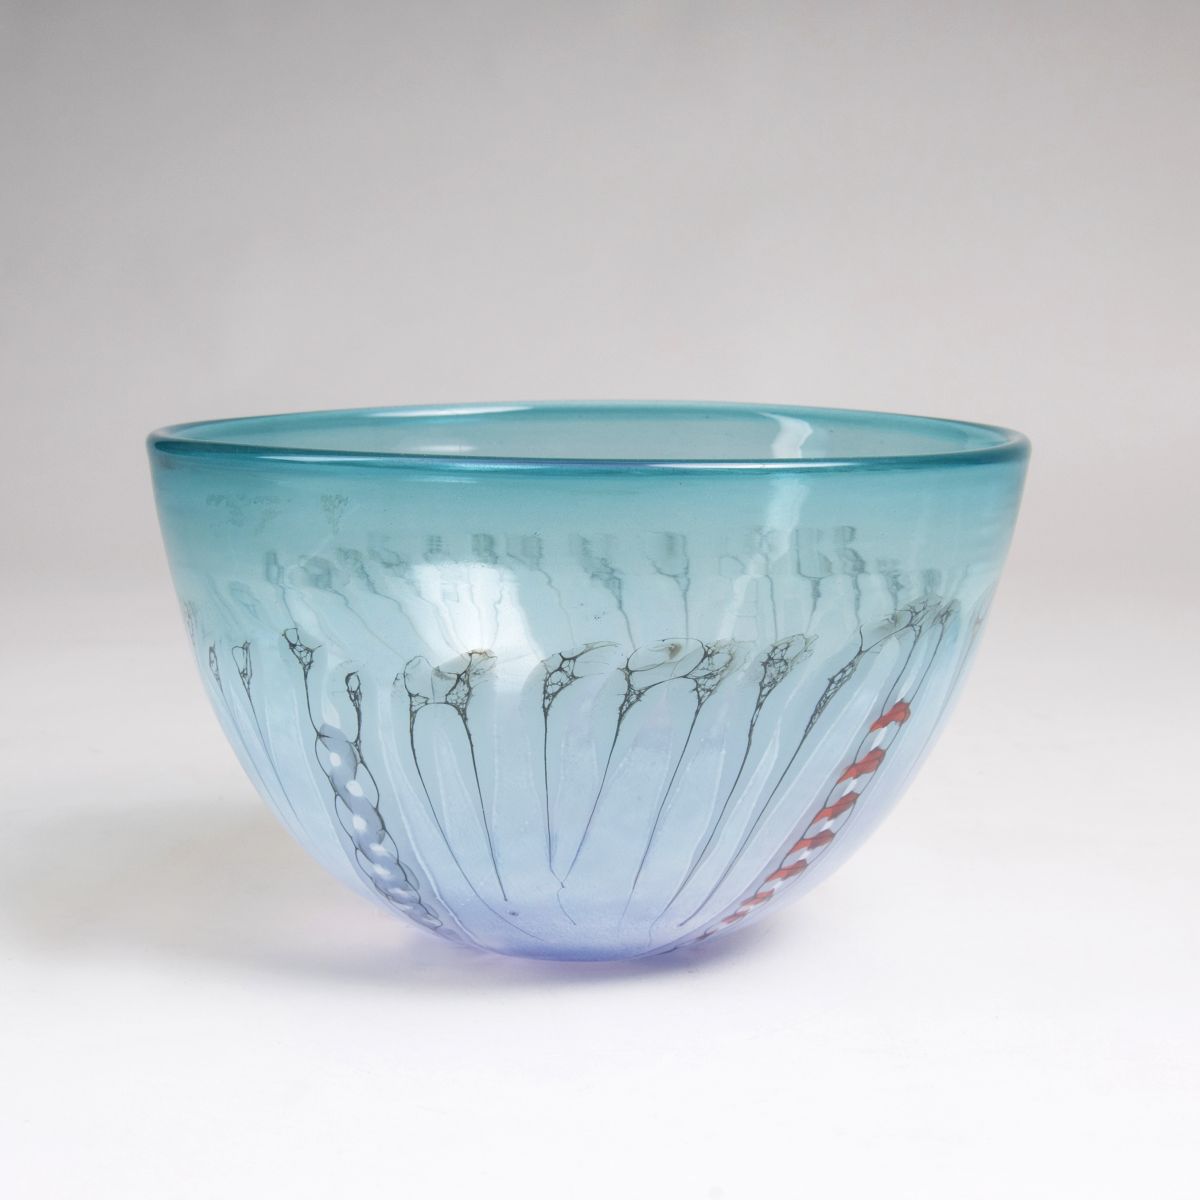 A modern glass bowl